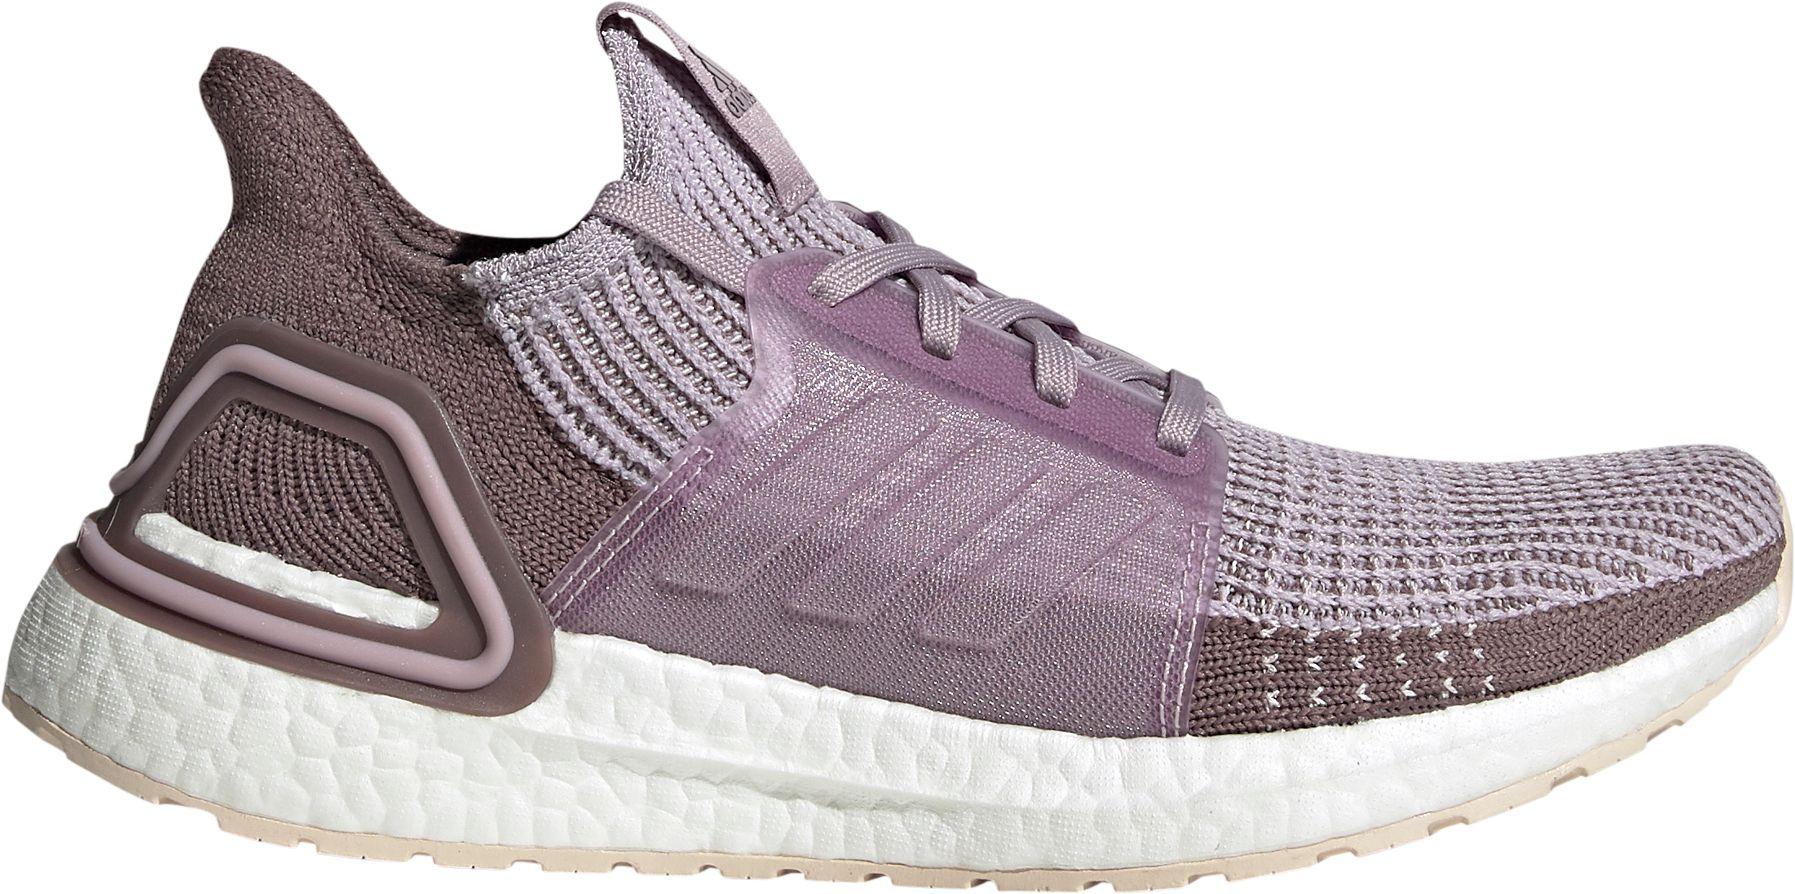 adidas Ultraboost 19 Running Shoes in Soft Purple (Purple) | Lyst